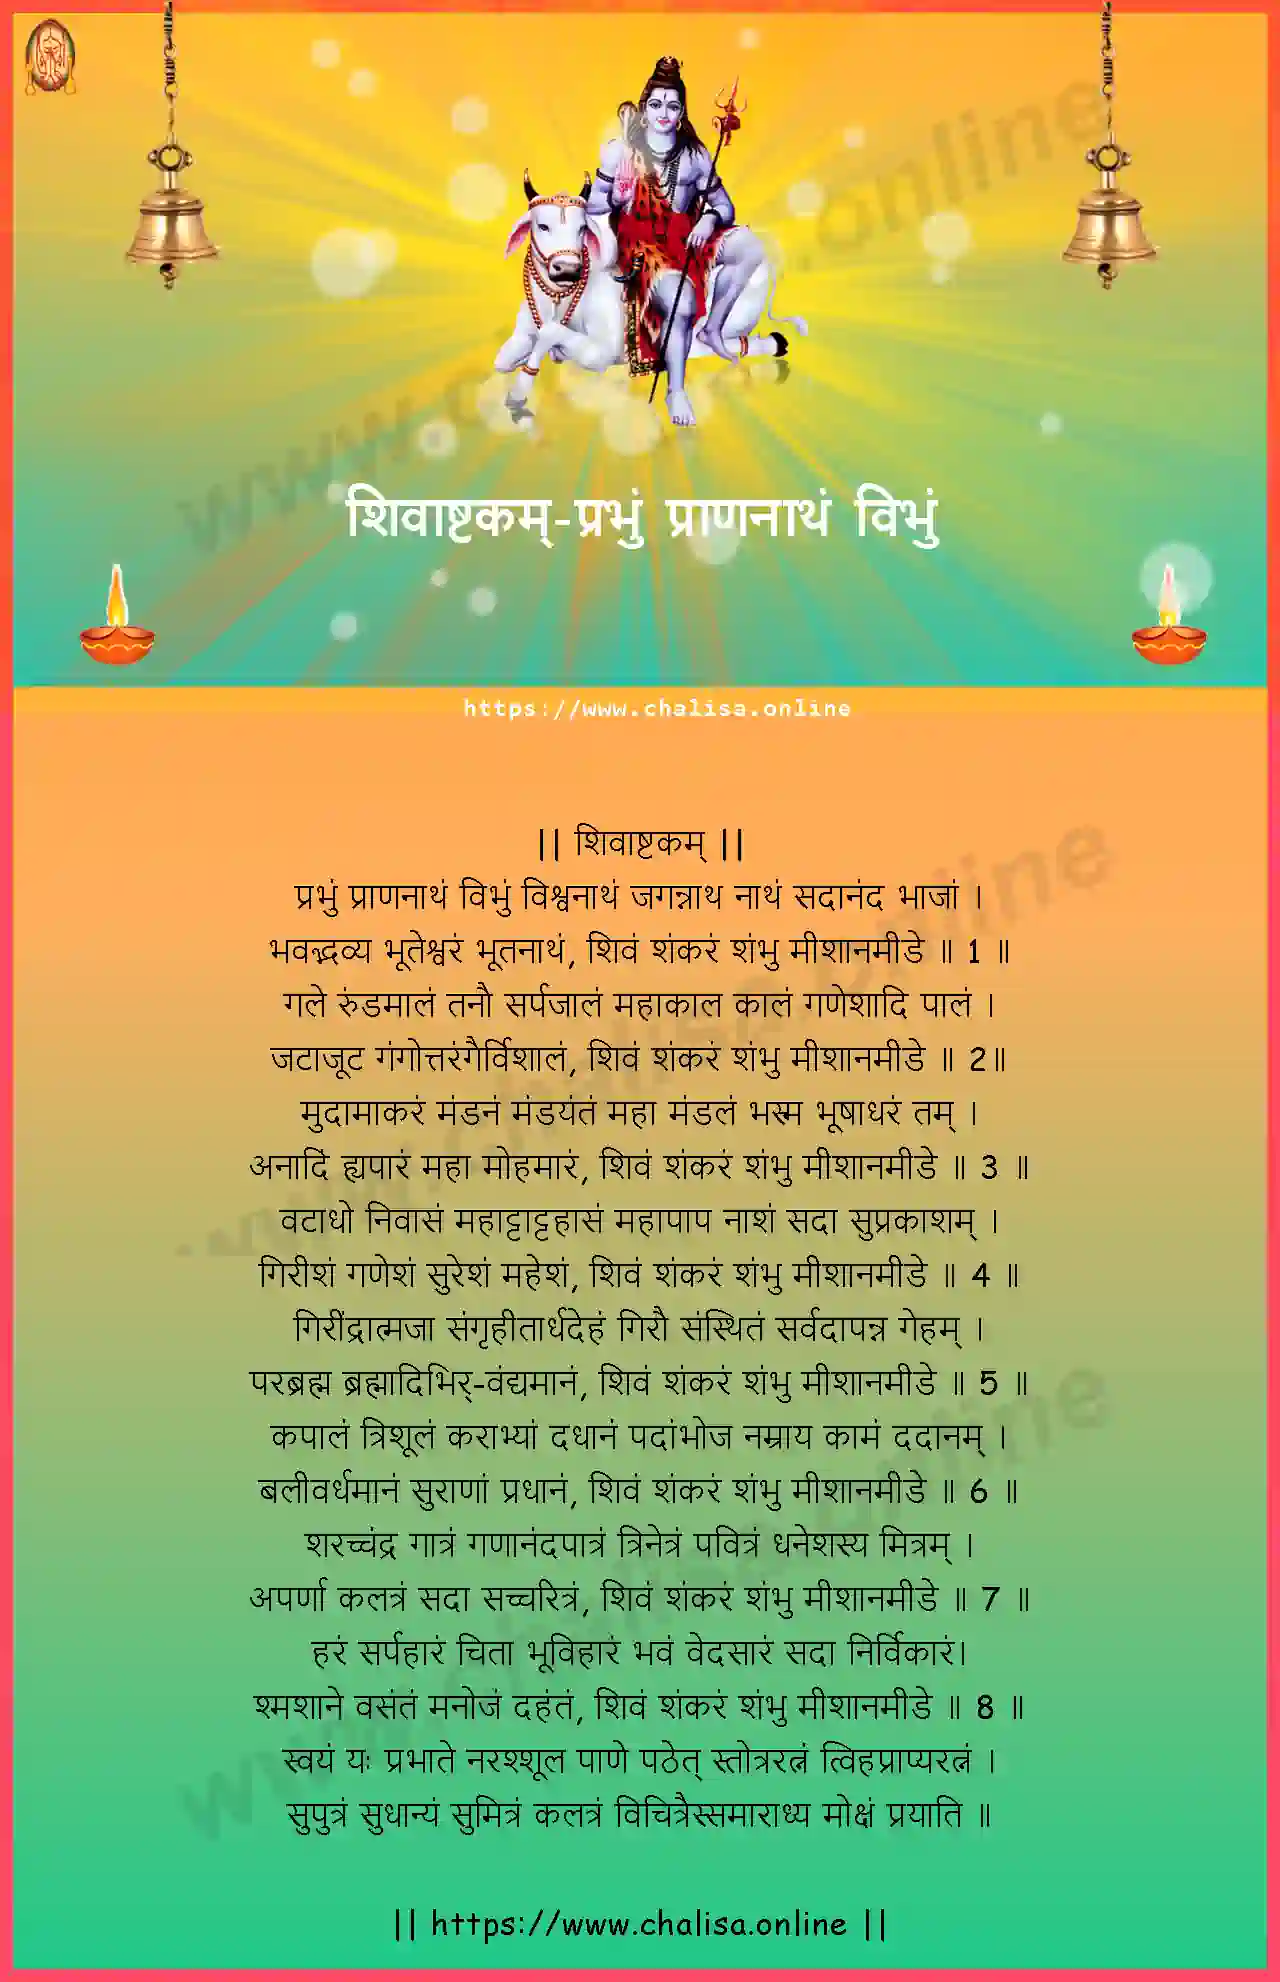 prabhum-prananatham-shivashtakam-marathi-marathi-lyrics-download